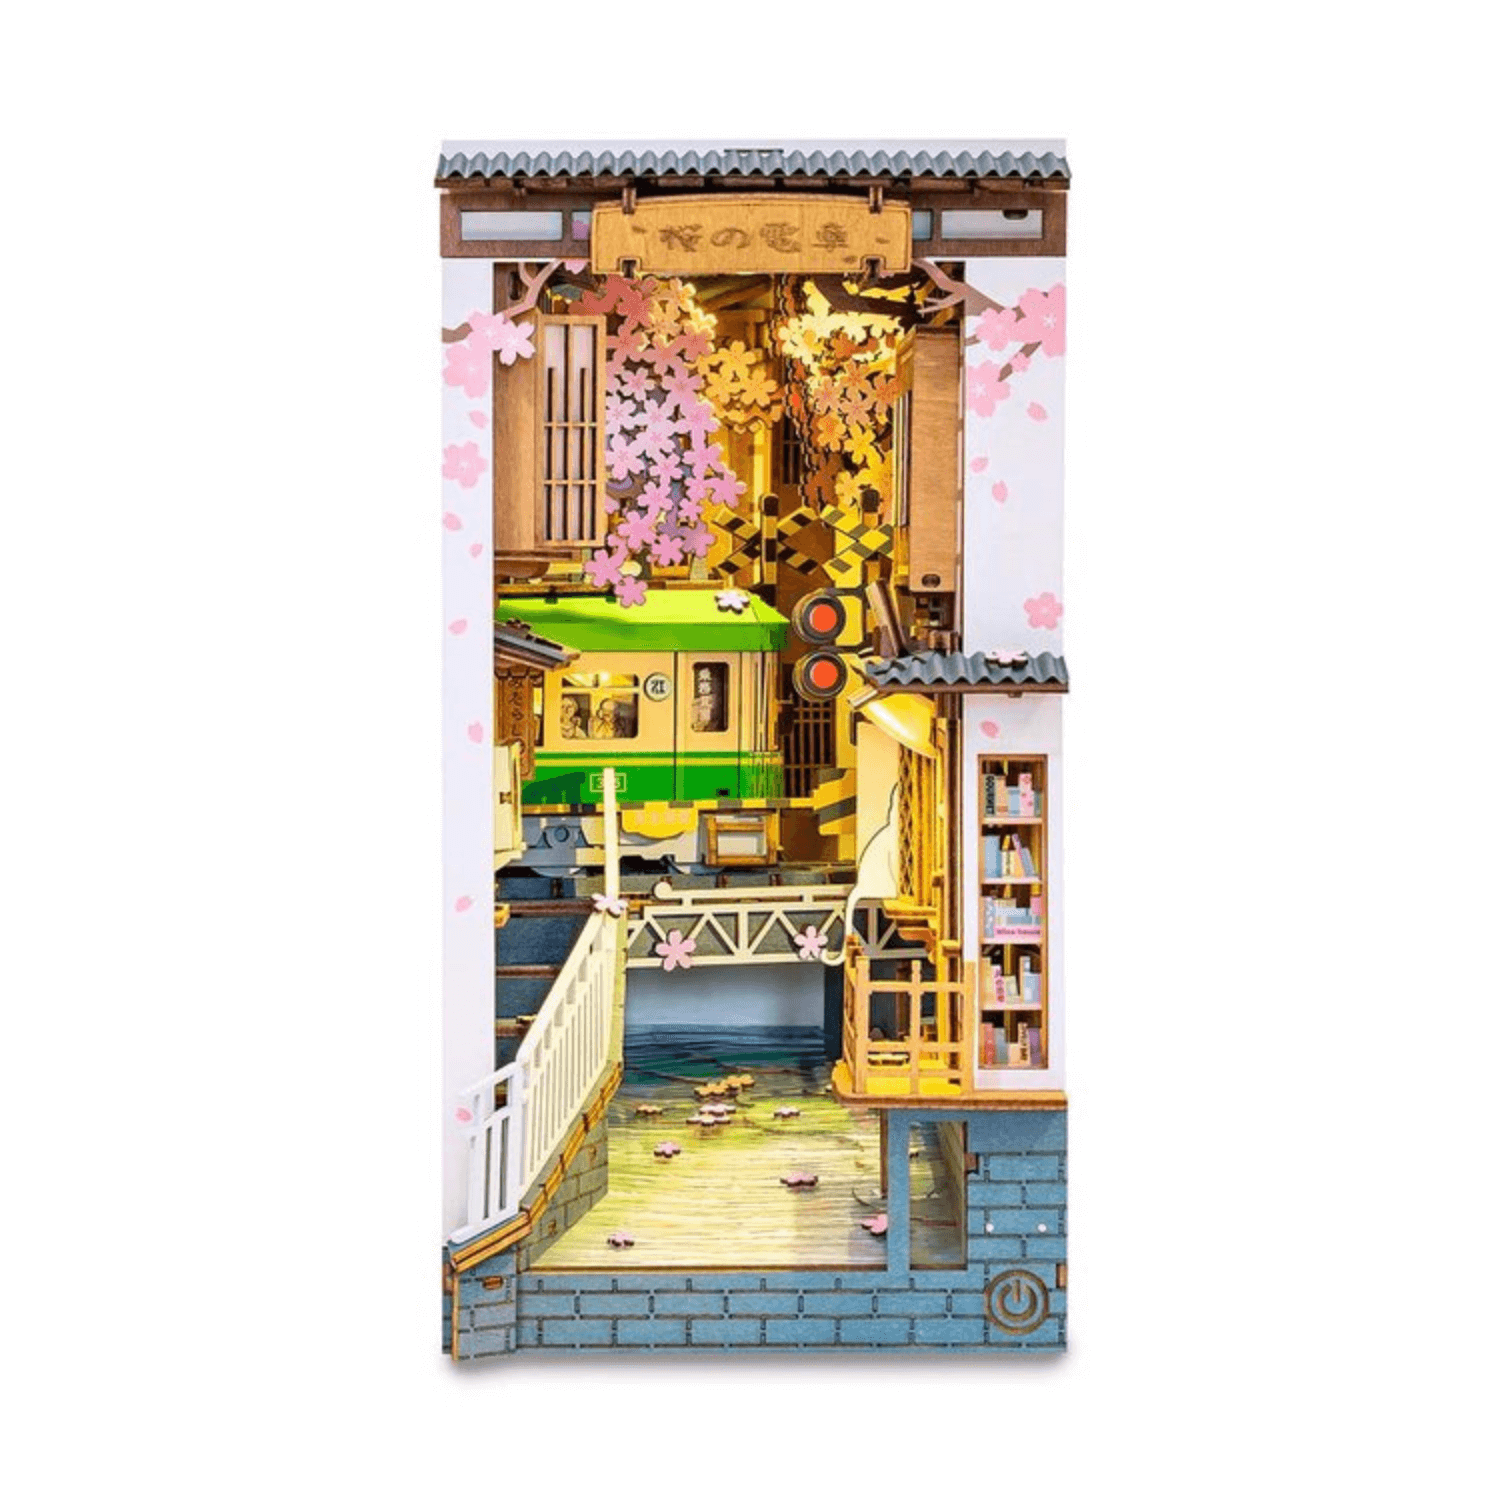 LEGO Architecture Tokyo + Sakura Mini Set (Japanese Limited Edition)